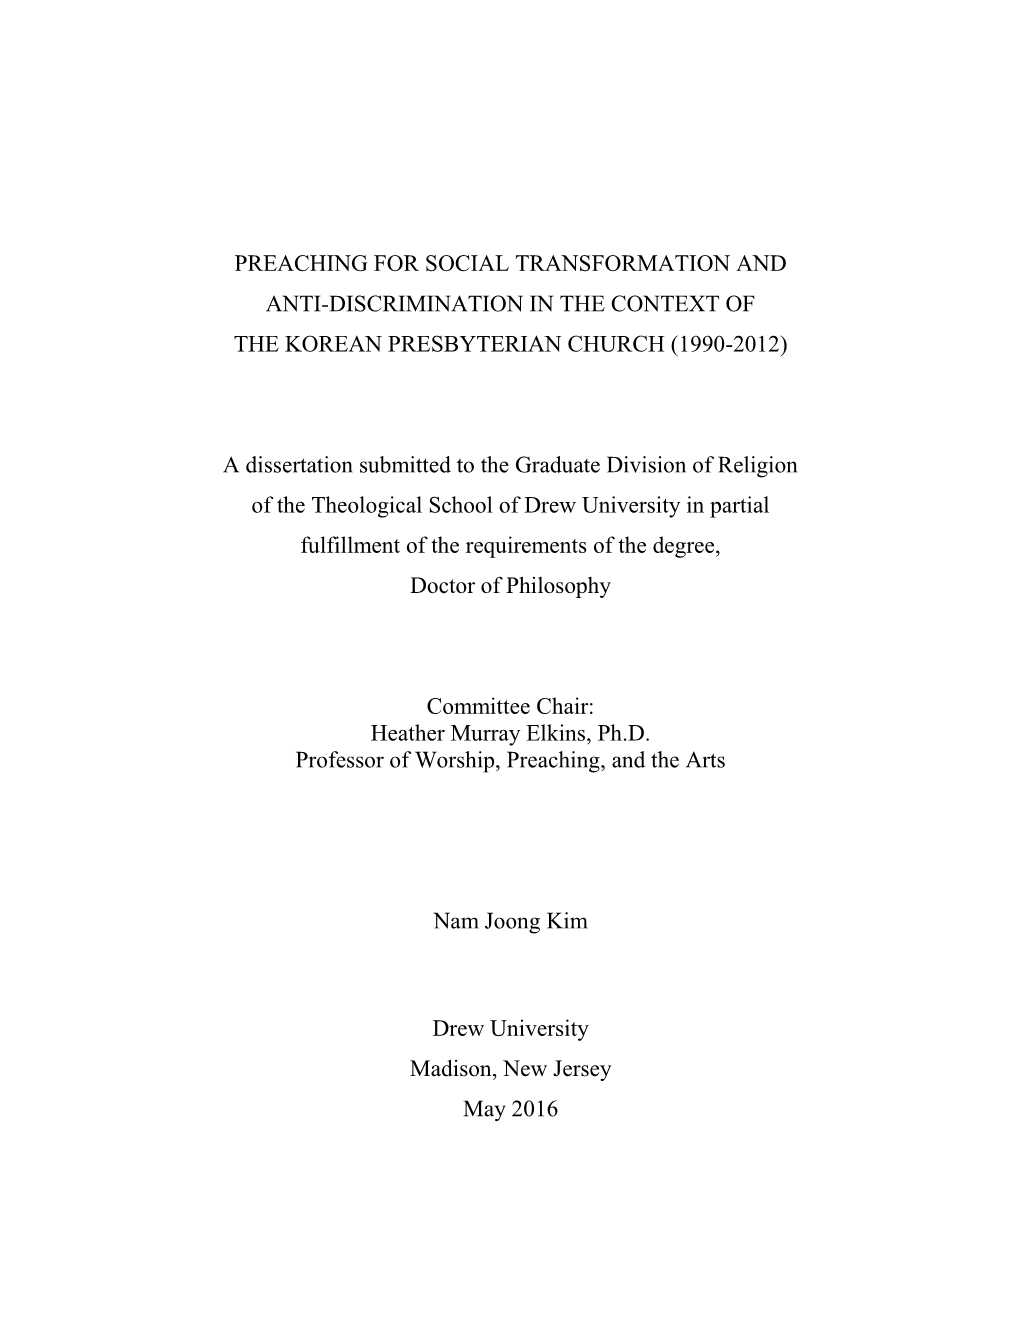 Preaching for Social Transformation and Anti-Discrimination in the Context of the Korean Presbyterian Church (1990-2012)